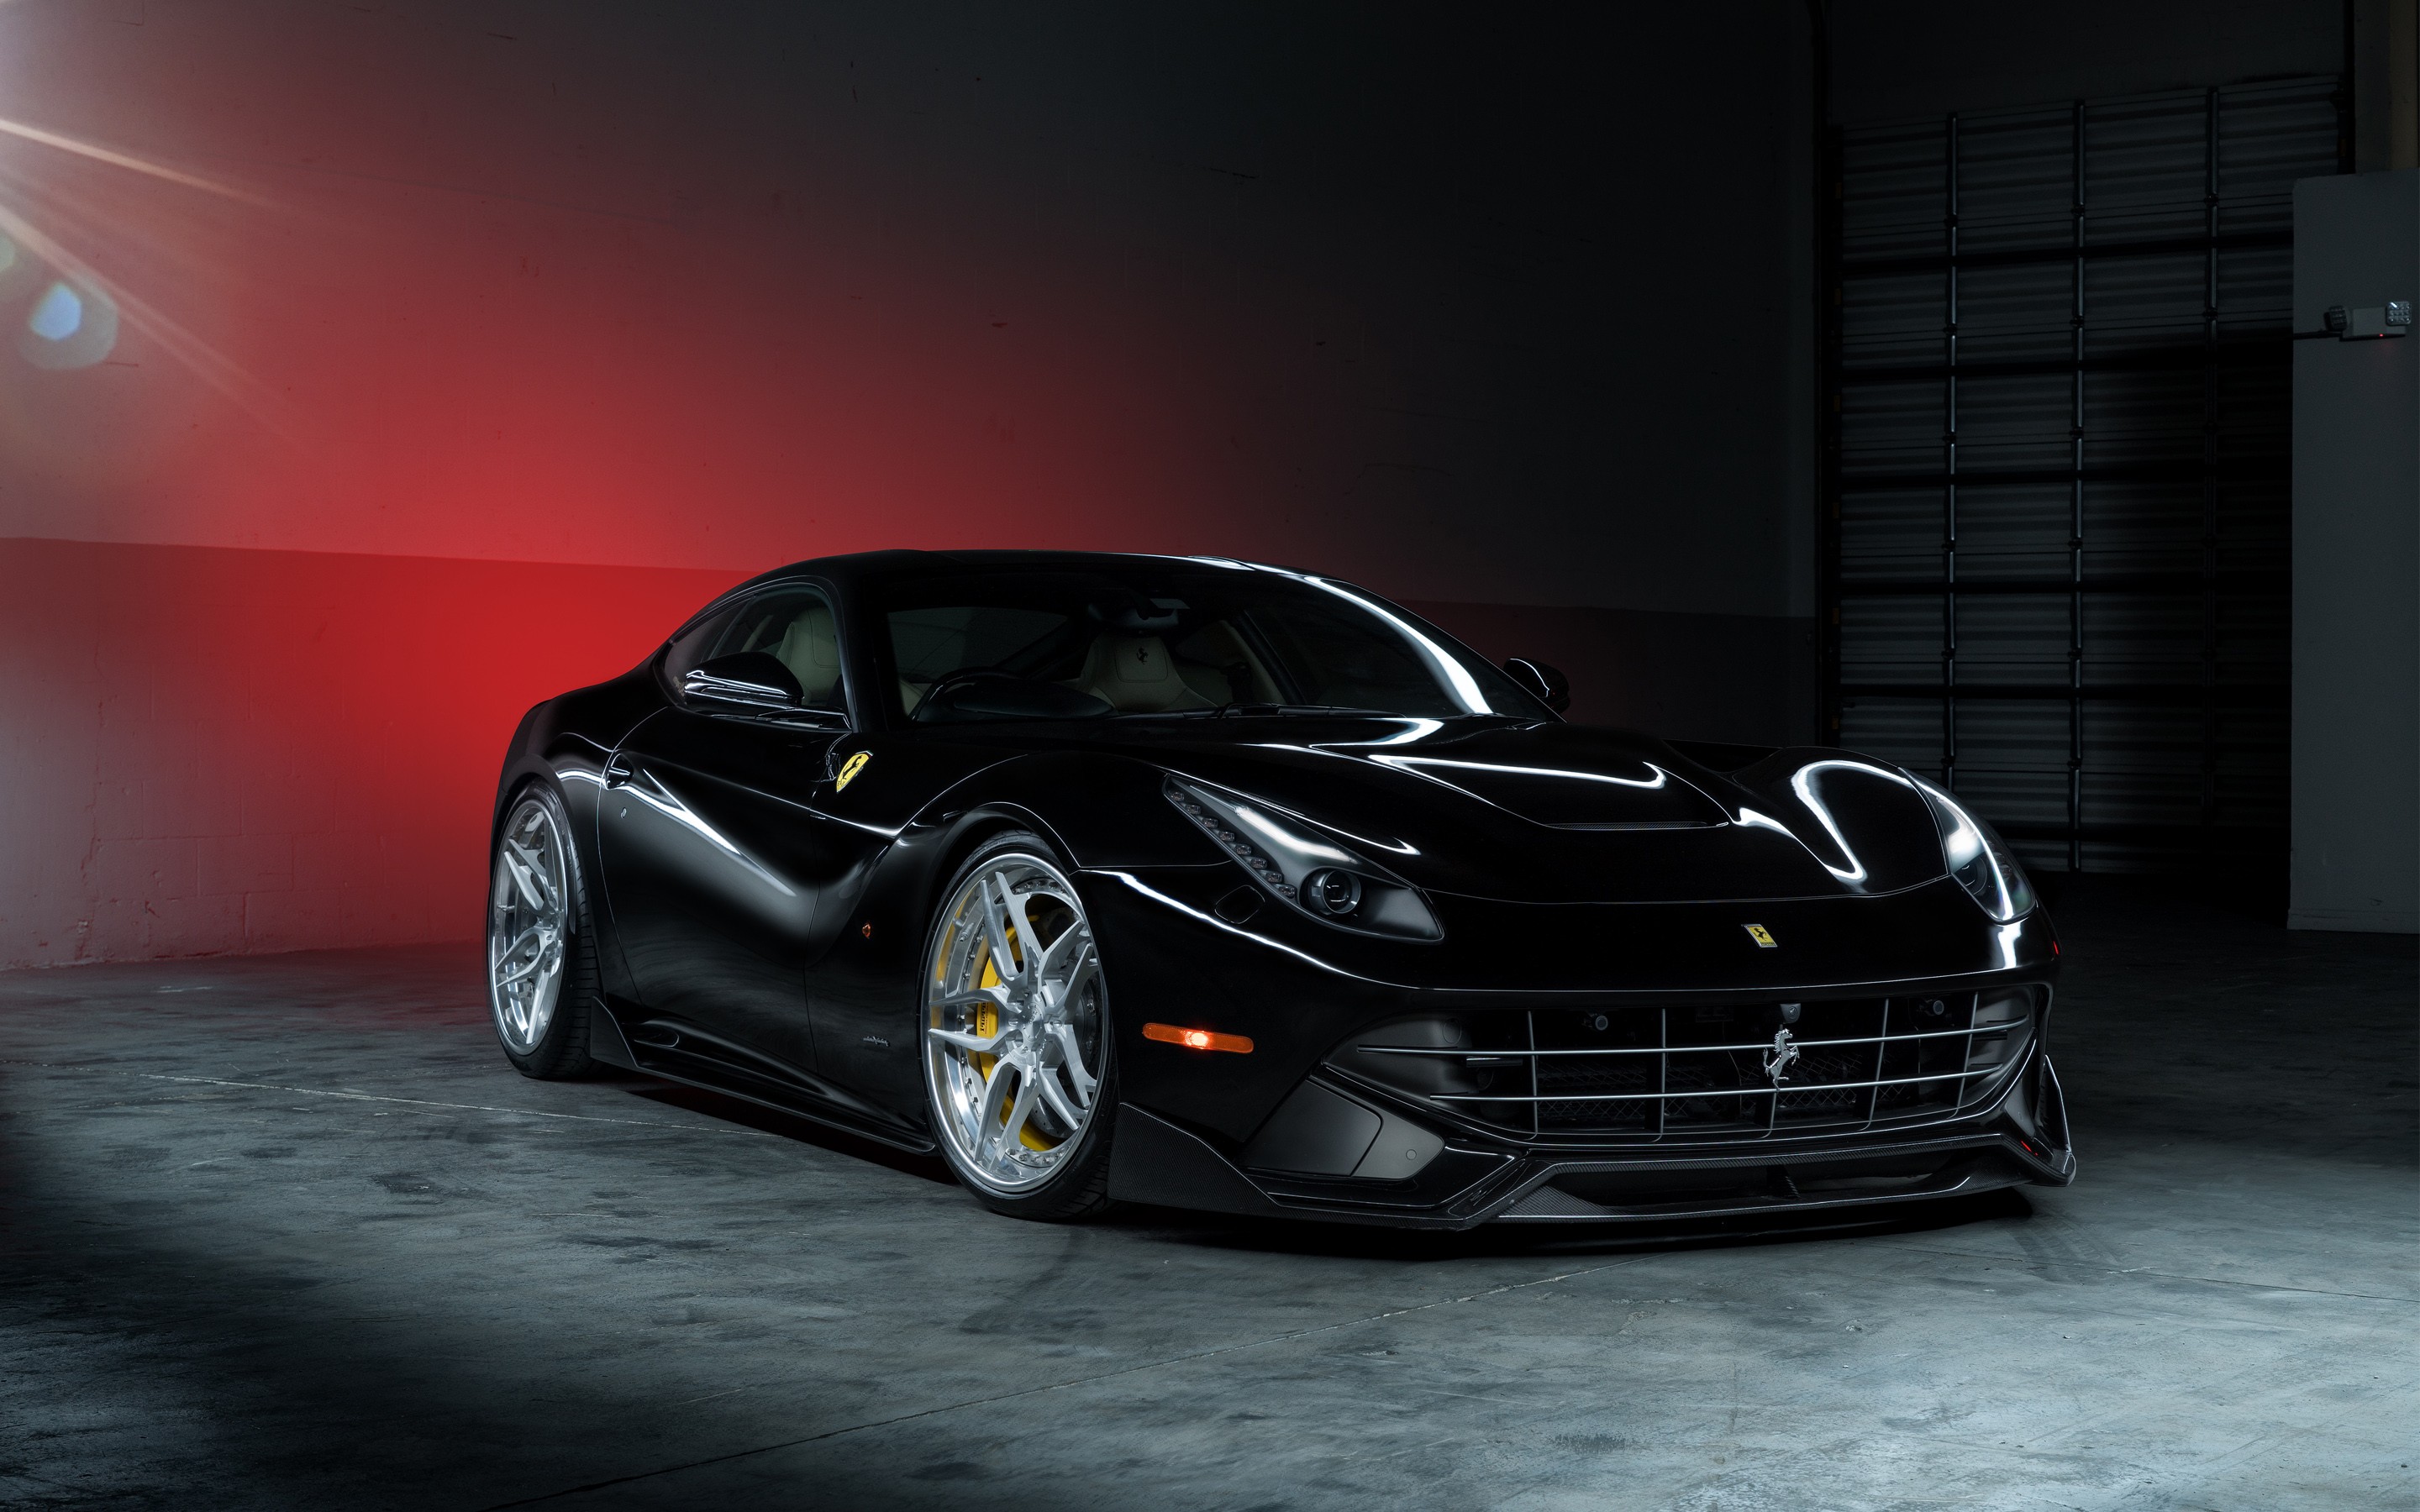 Ferrari F12 Berlinetta, HD Cars, 4k Wallpaper, Image, Background, Photo and Picture